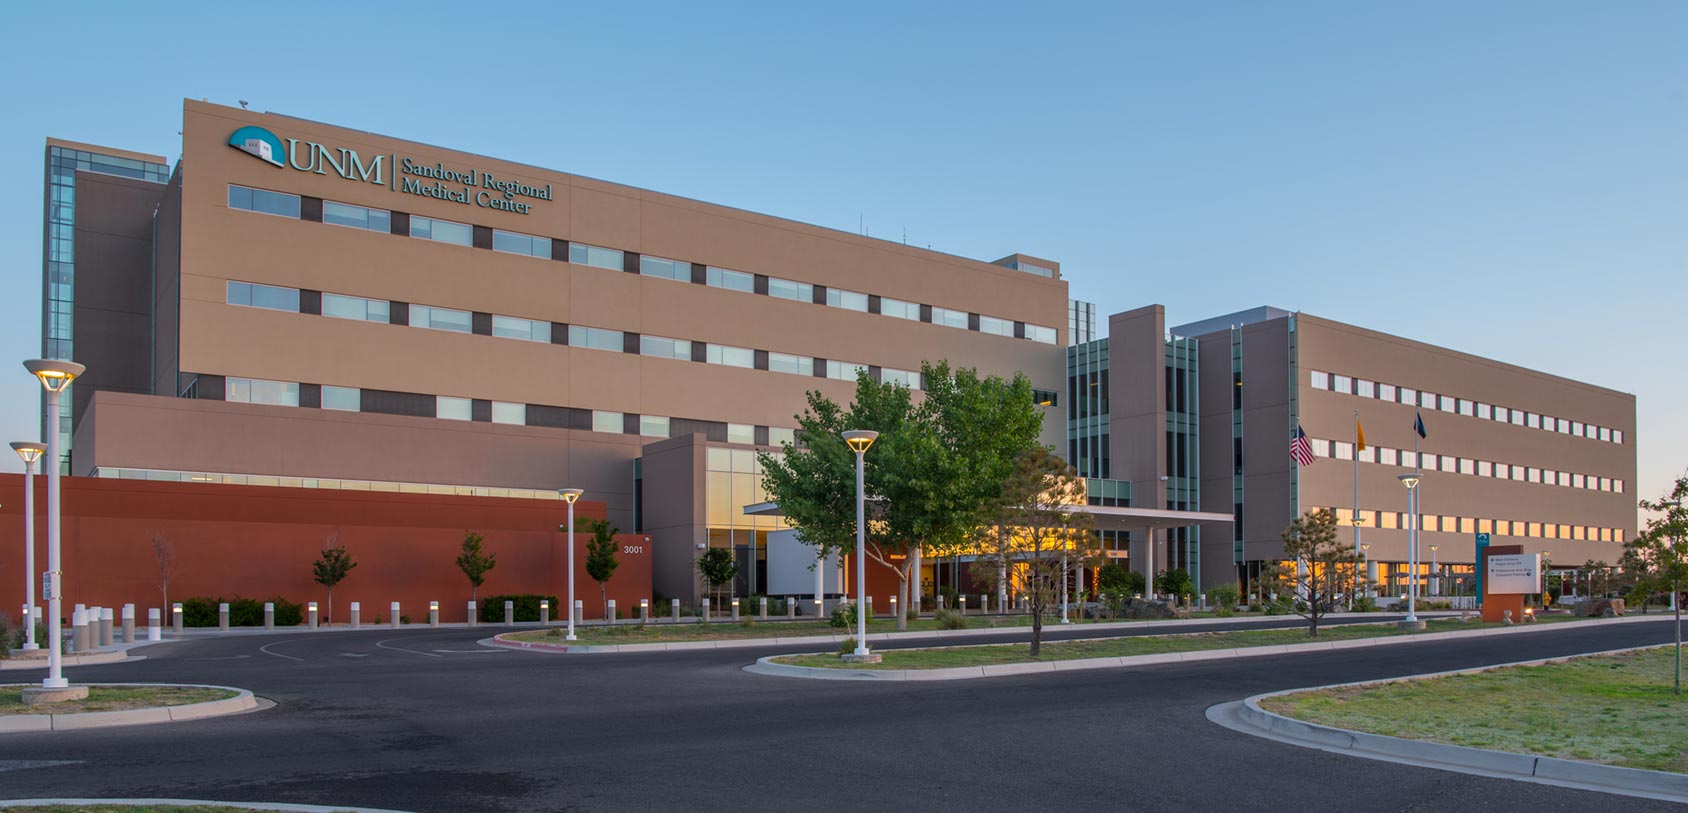 Regionales medizinisches Zentrum Sandoval